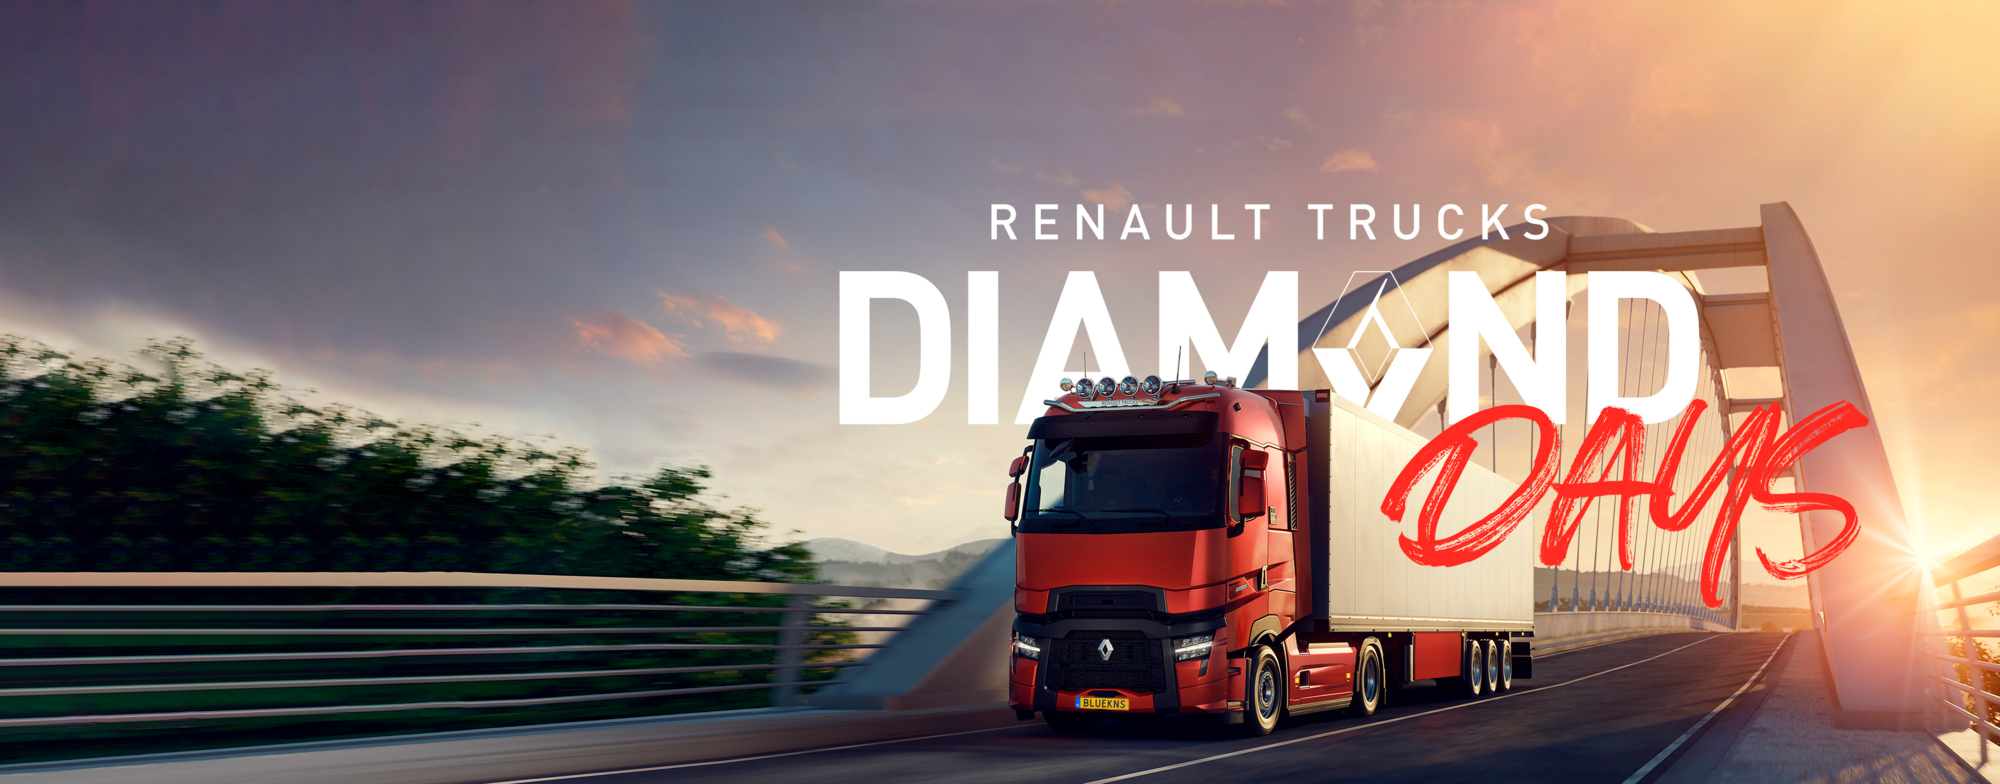 Bluekens-truck-en-bus-Renault-Trucks-Diamond-days-wide